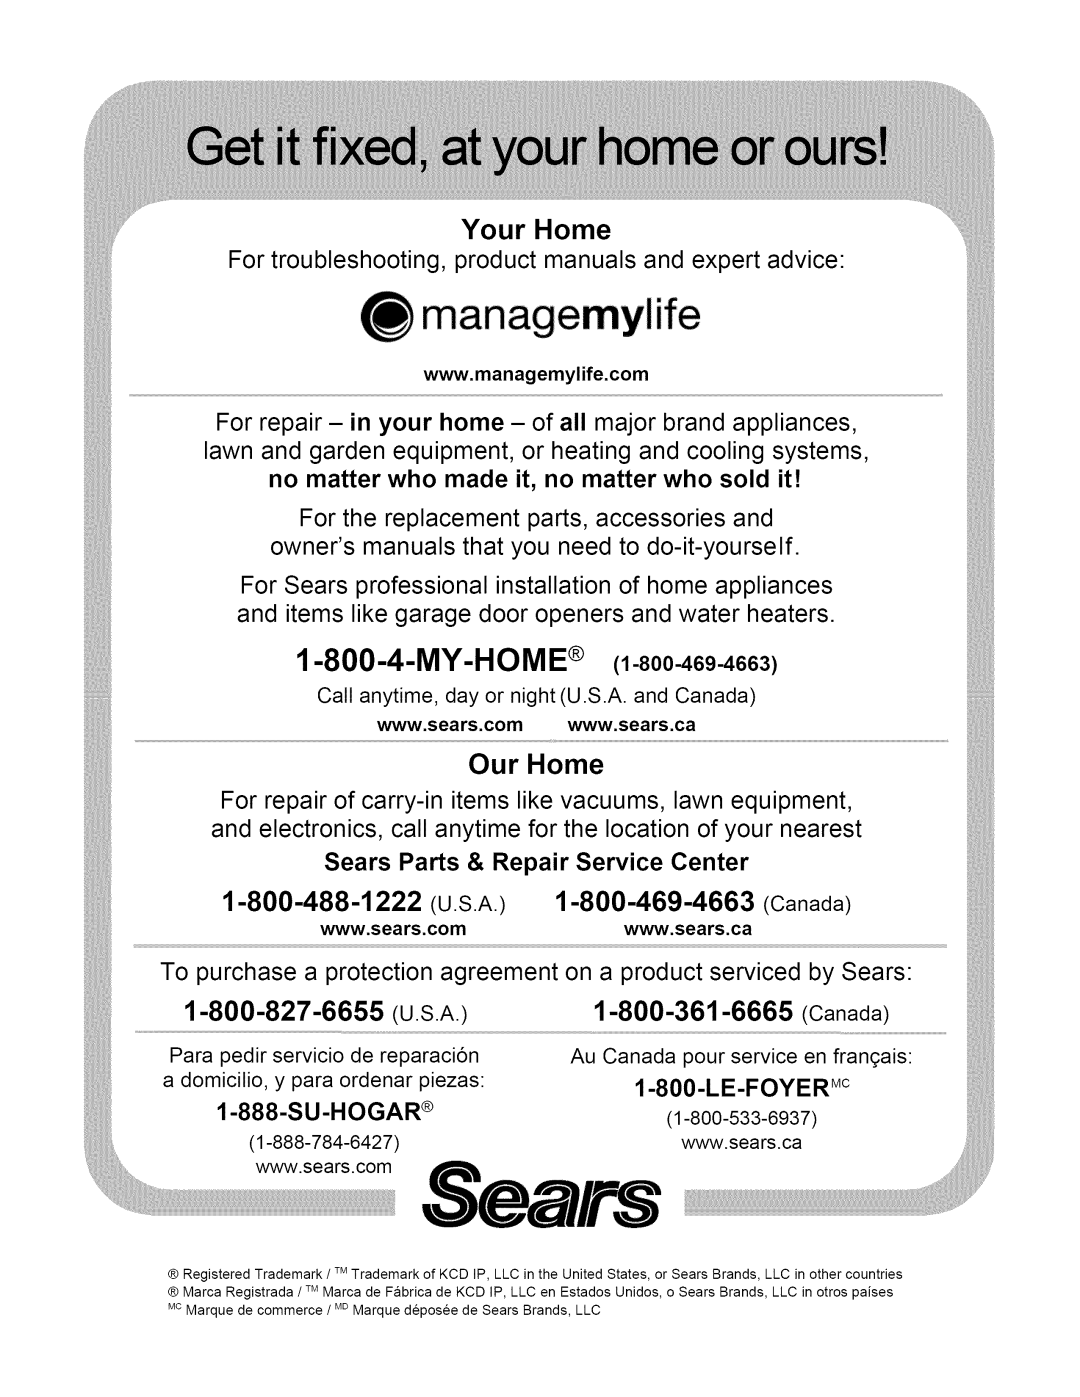 Kenmore 630.1395 manual 0ur H0me, Your Home, Sears Parts & Repair Service Center 